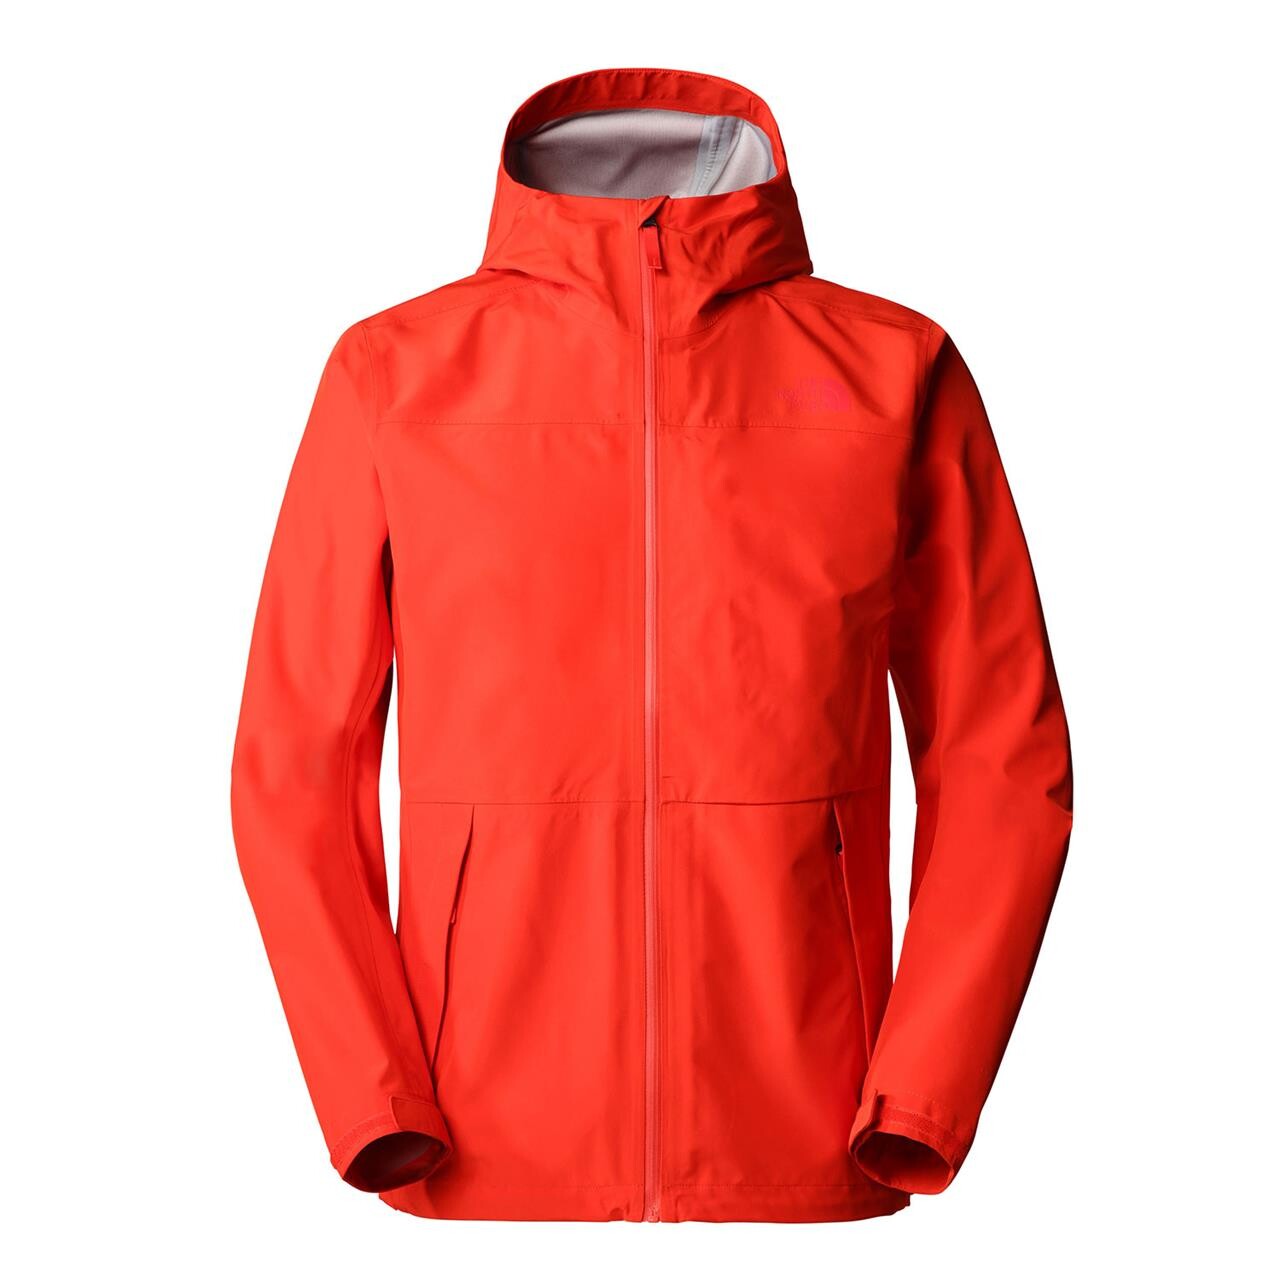 Billede af The North Face Mens Dryzzle Futurelight Jacket (Rød (FIERY RED) Medium)